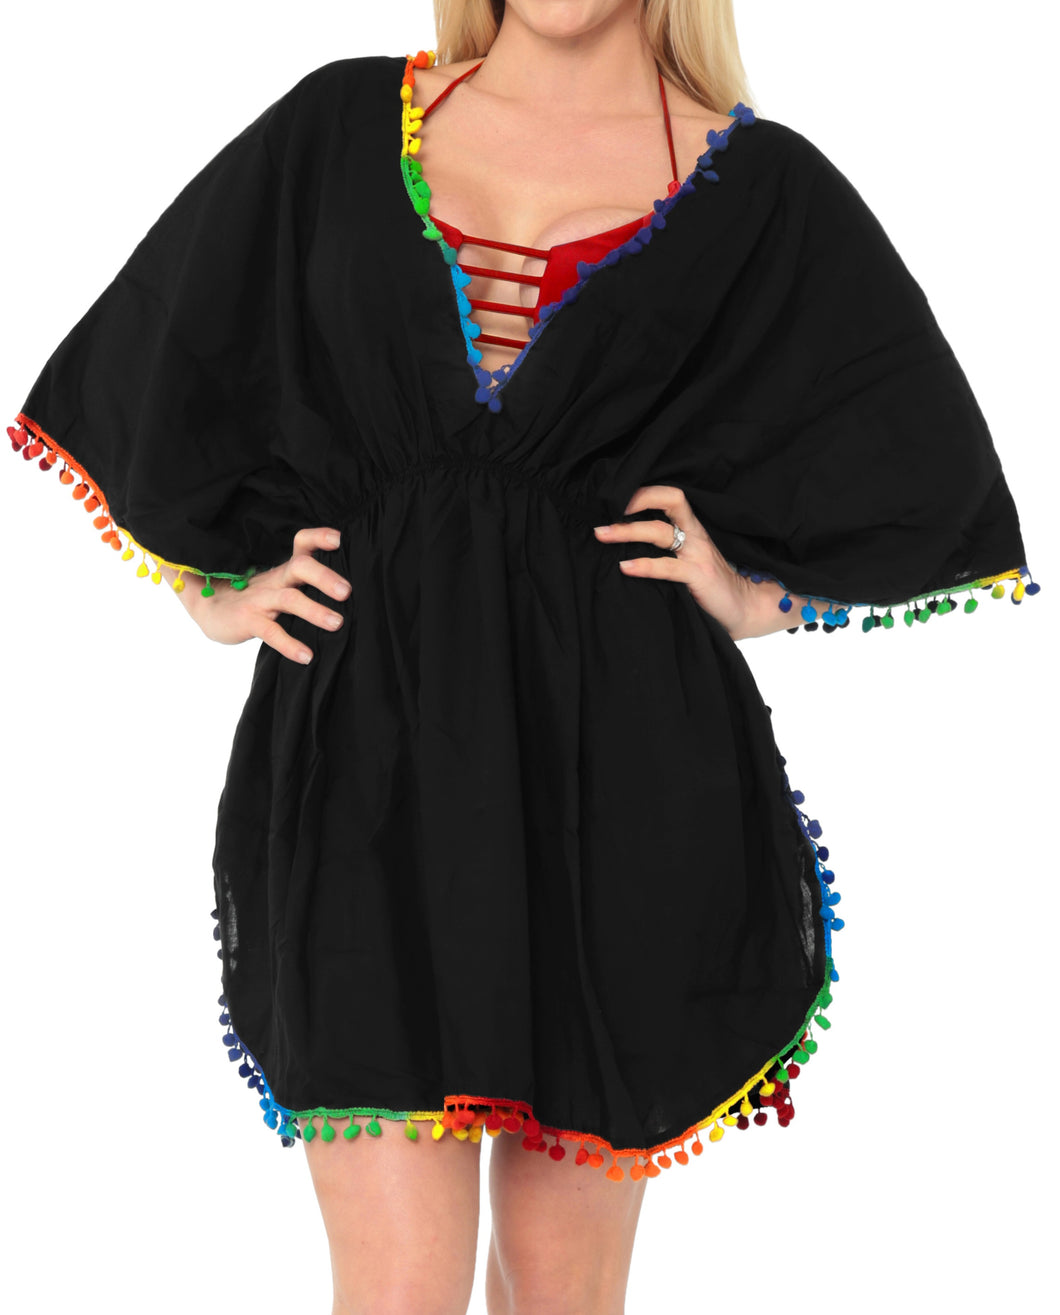  LA LEELA-Women's-Mini-Bathing-Suit-Cover-Up-for-Beach-Pool-Swimwear-Solid-Plain-black 